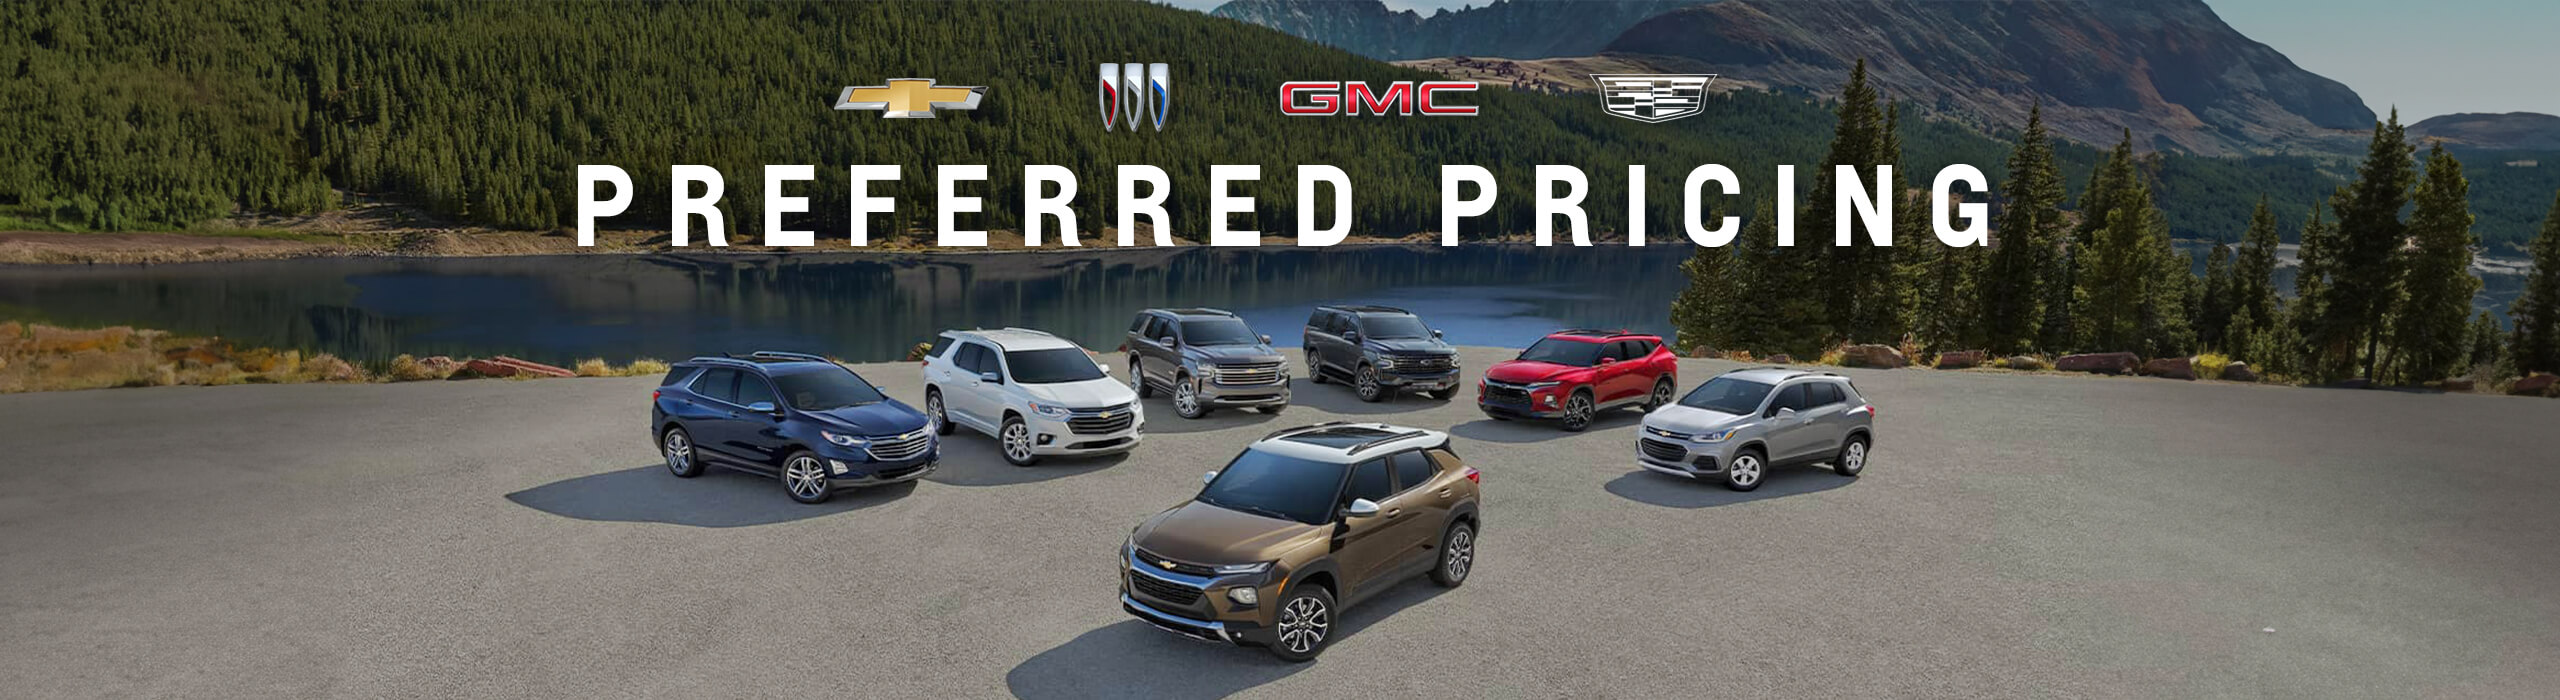 GM Preferred Pricing Program